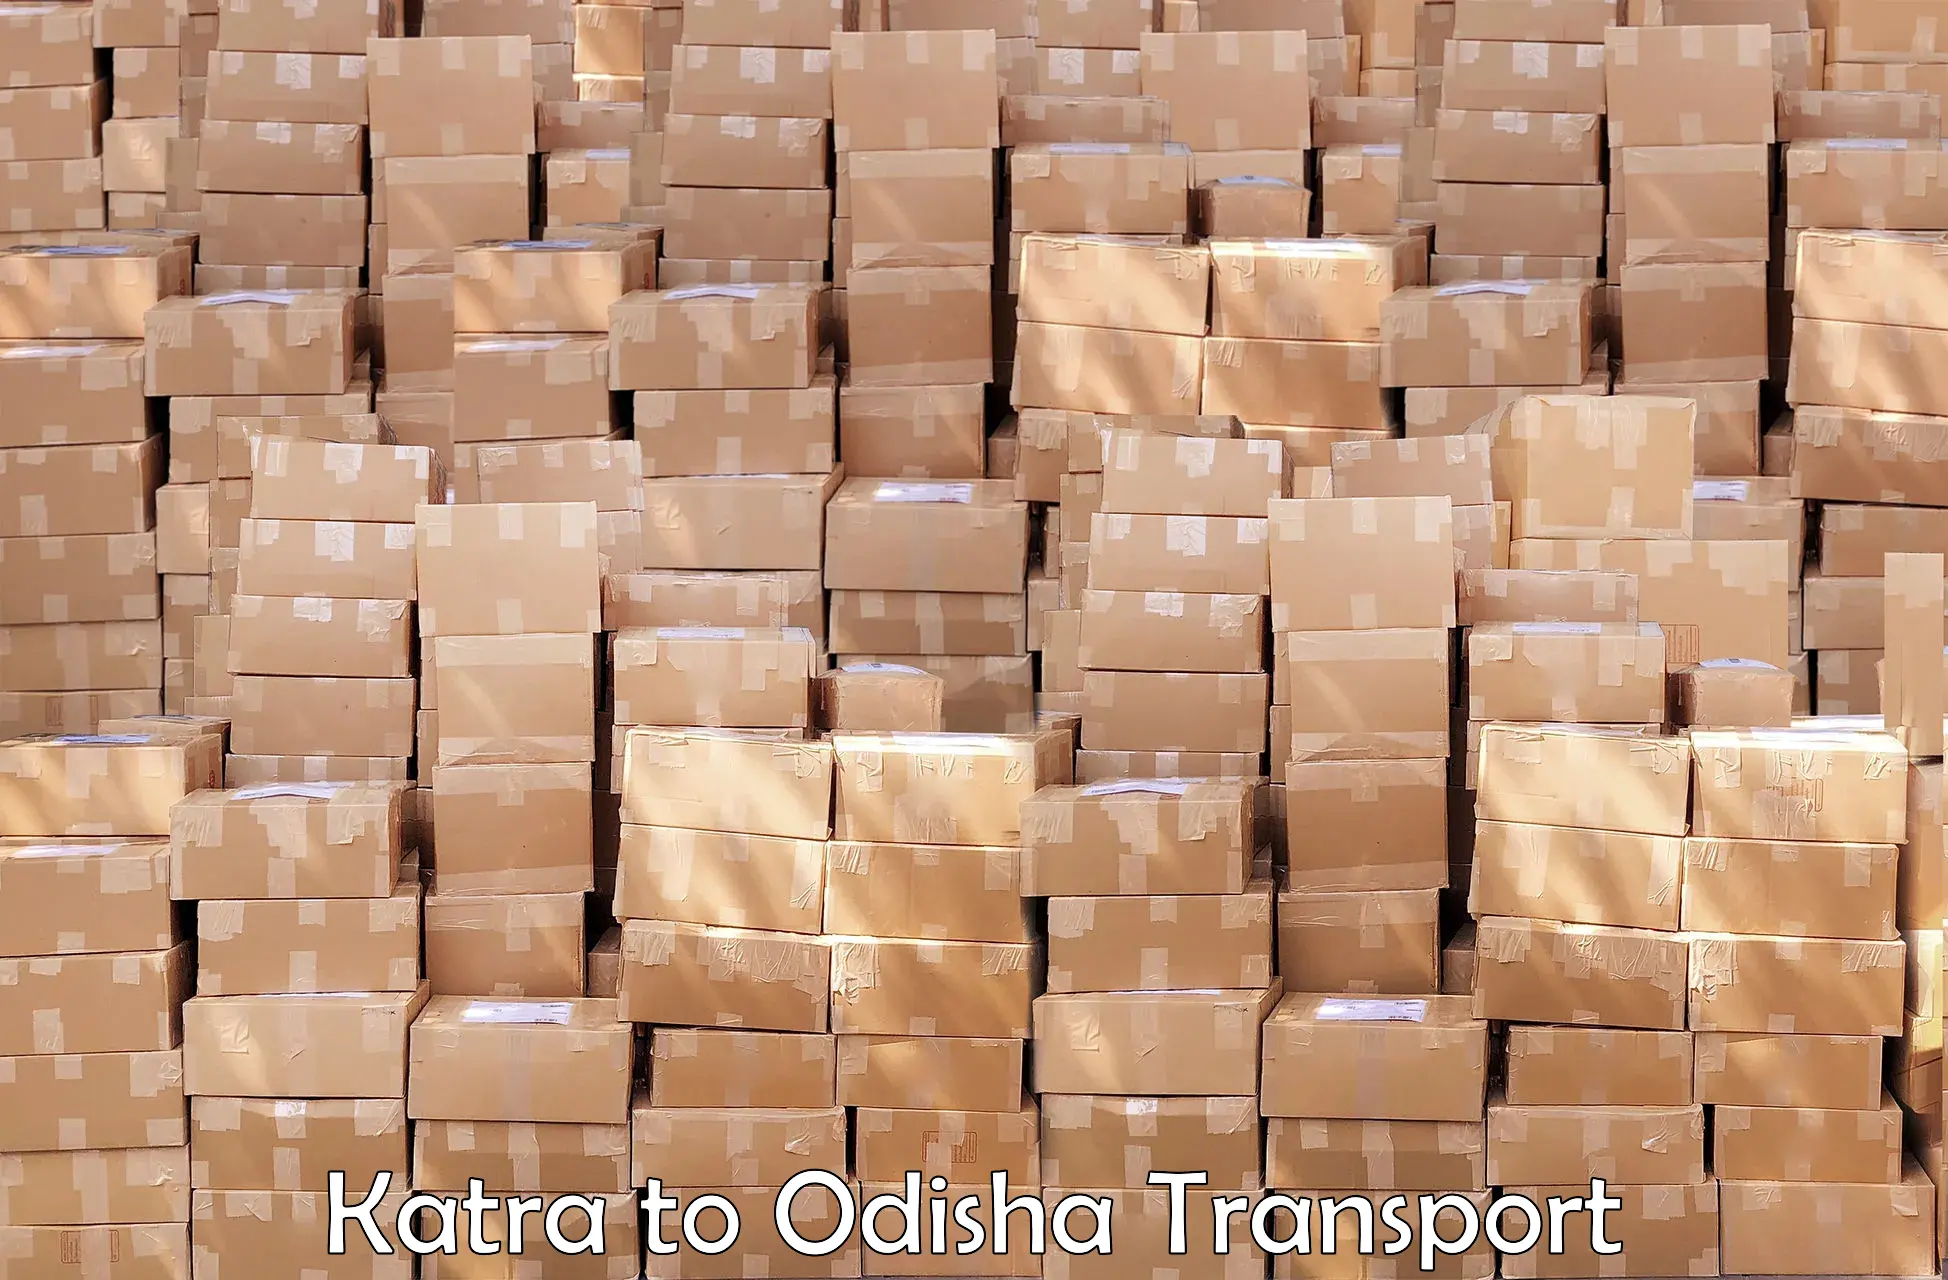 Nearest transport service Katra to Jagatpur